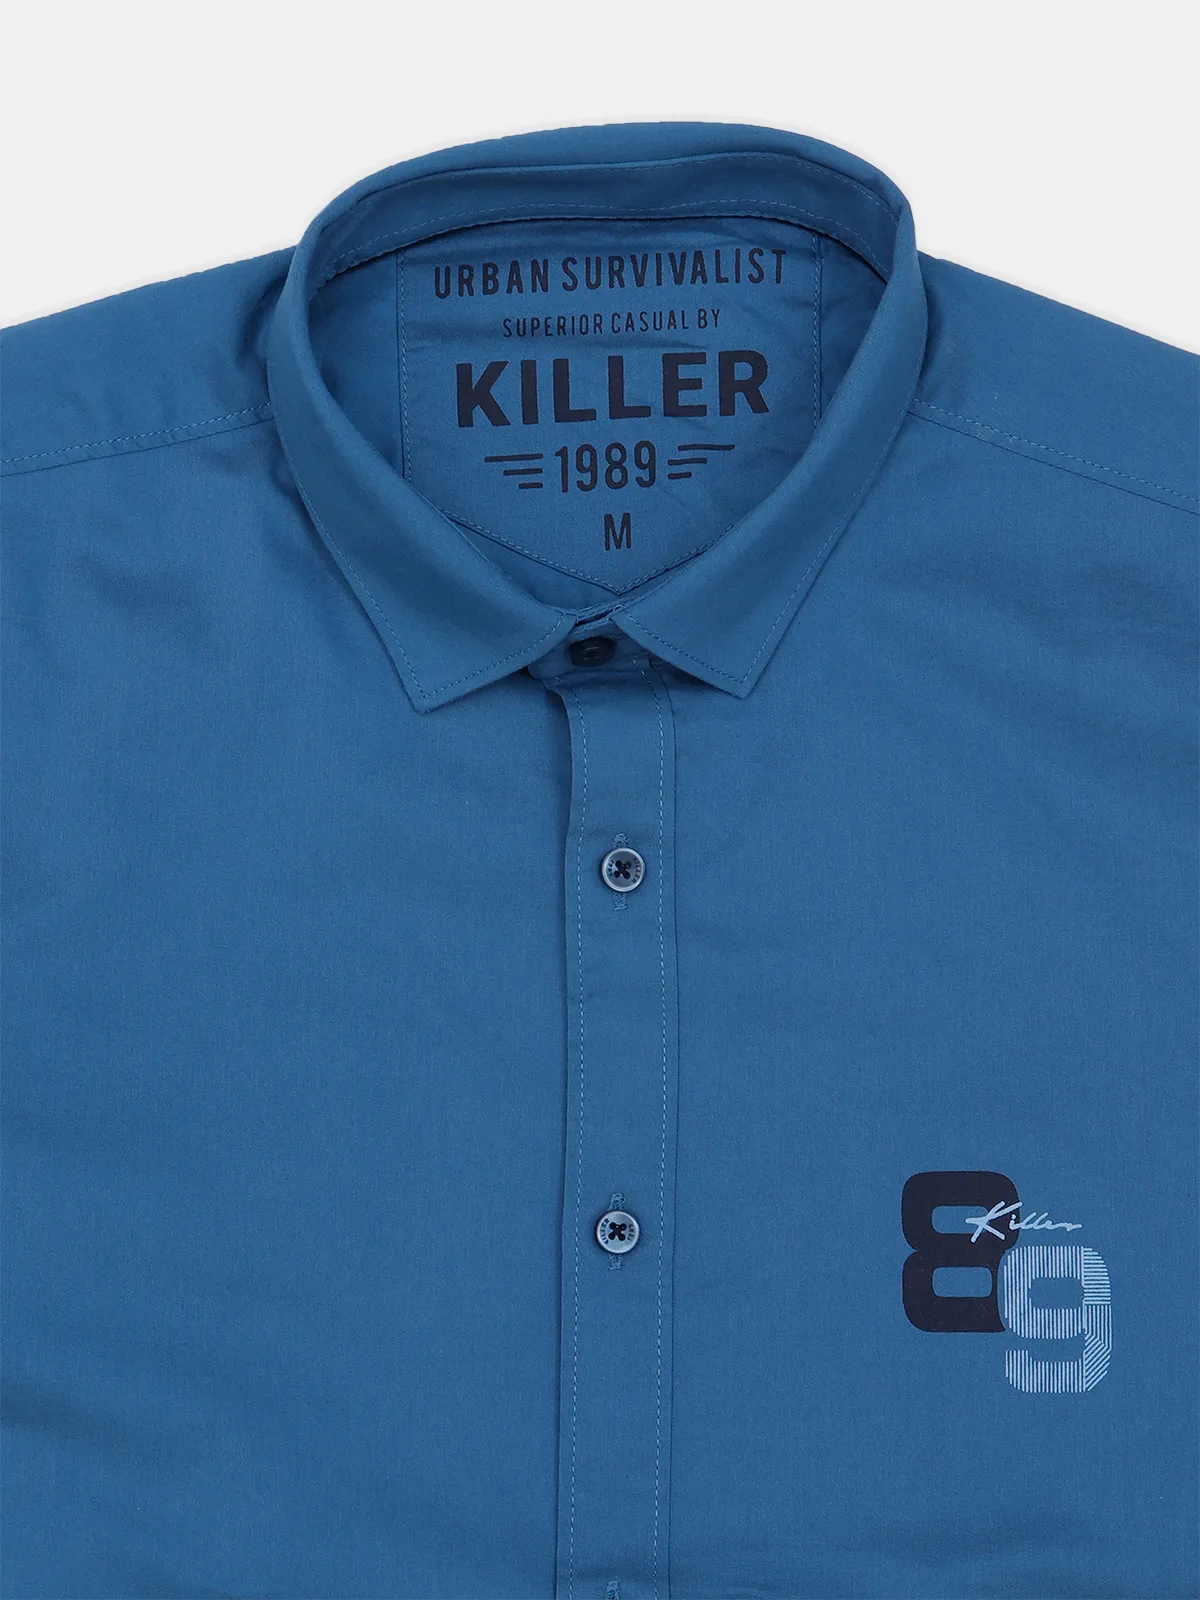 Killer casual wear printed blue shirt for men